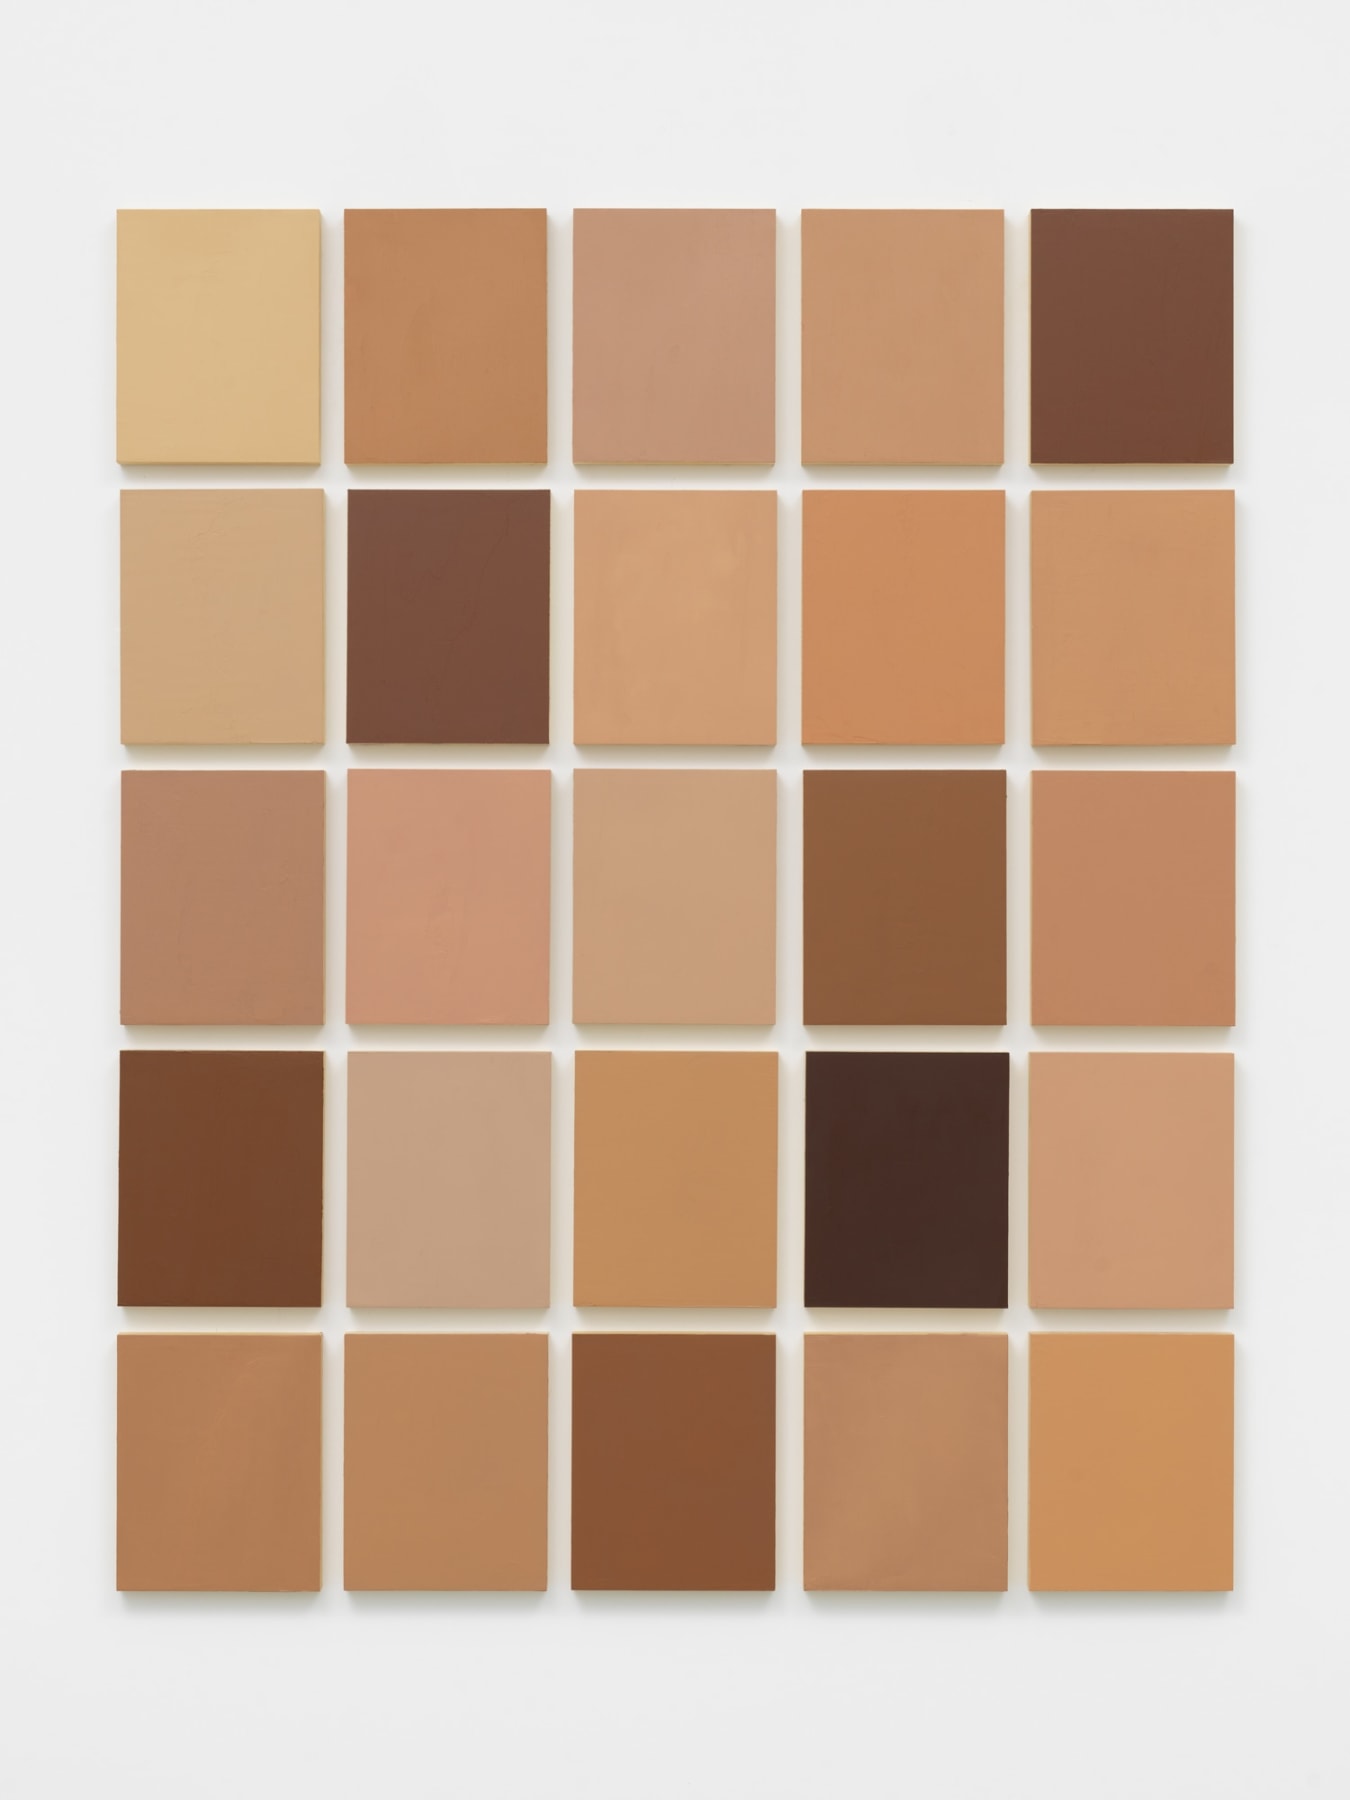 Twenty five blocks of skin tone colors representing twenty five people and their race